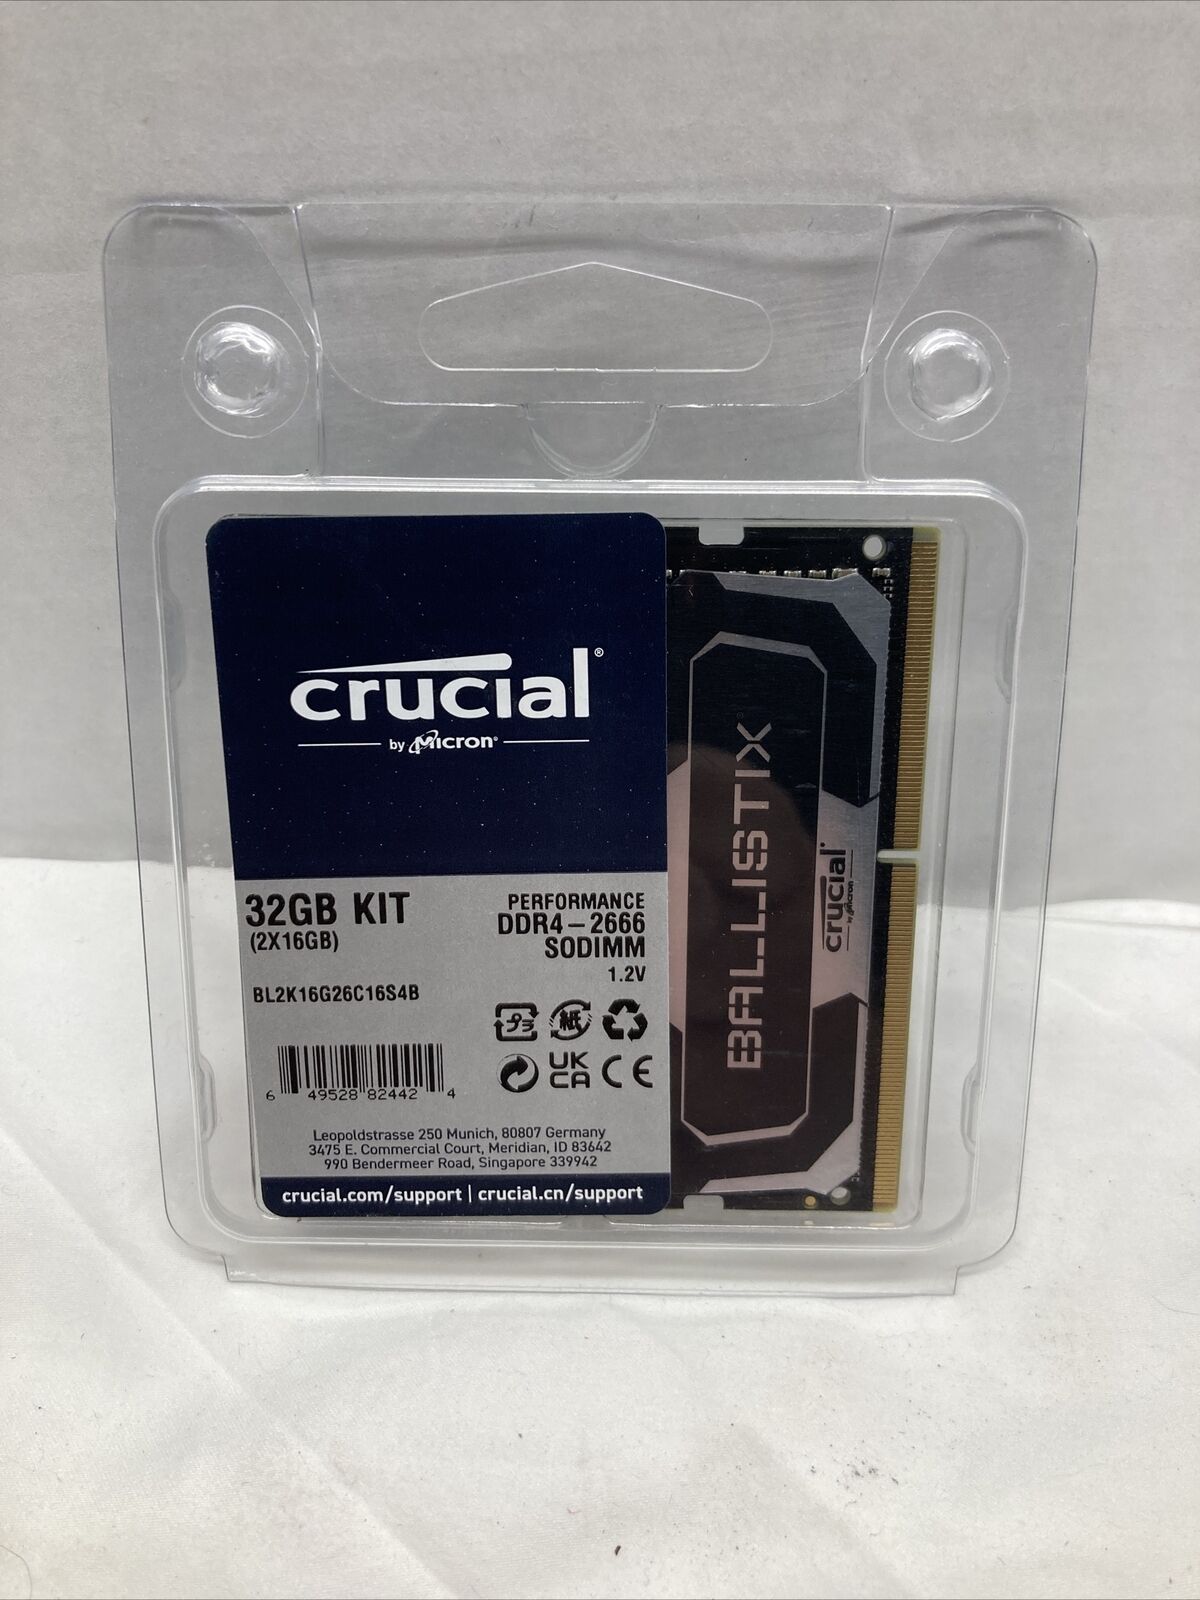 NEW!! Crucial Ballistix 2666MHz DDR4 Laptop Gaming Memory Kit 32GB (16GBx2)